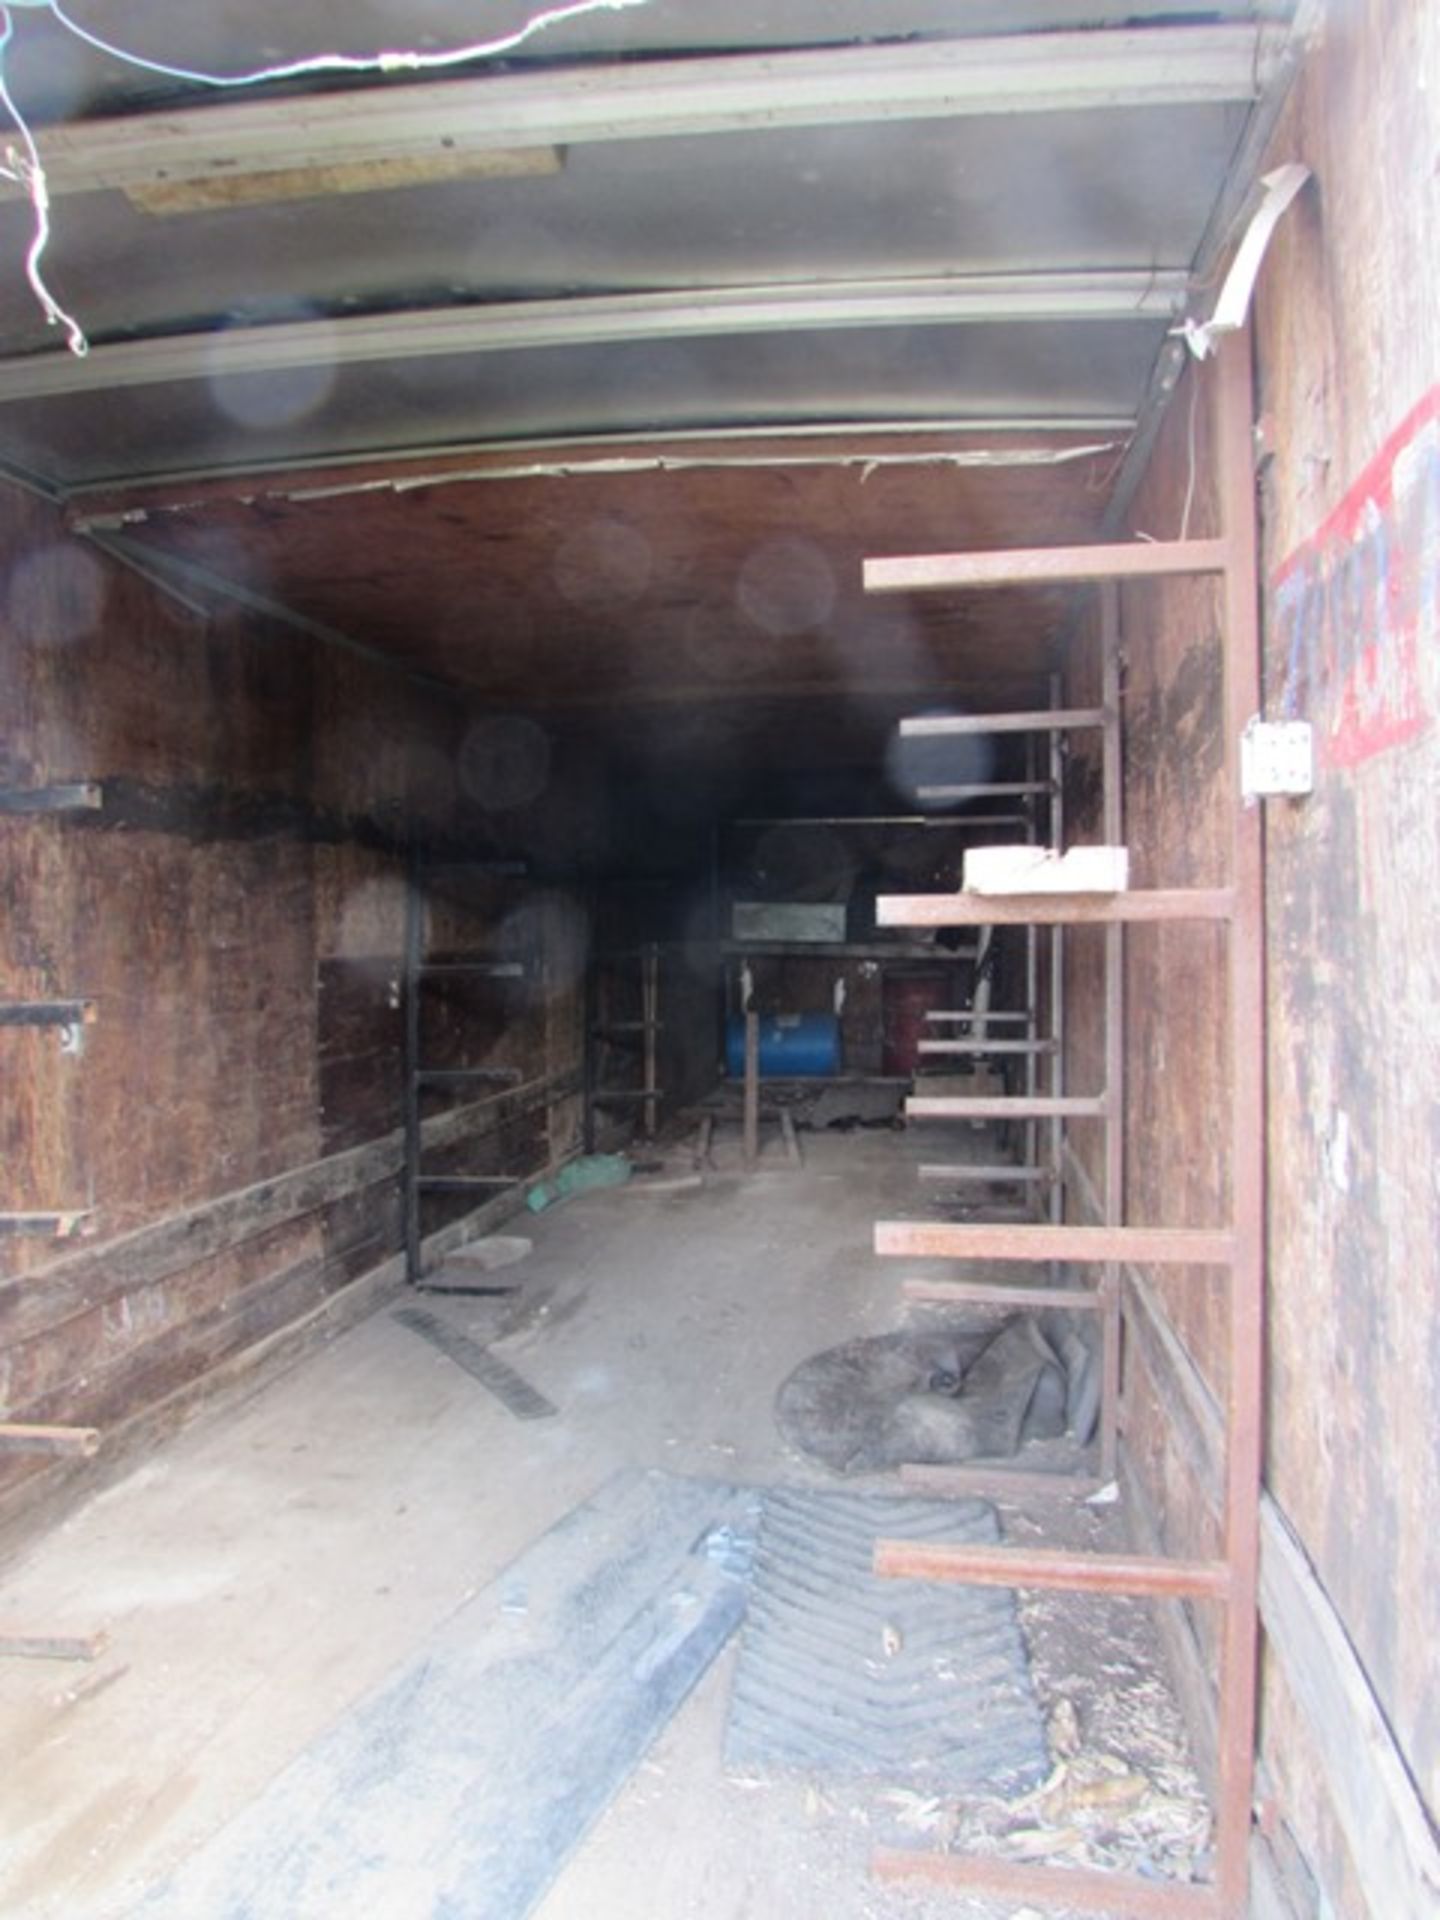 48' Storage trailer c/w barnyard doors, metal shelving - Image 2 of 2